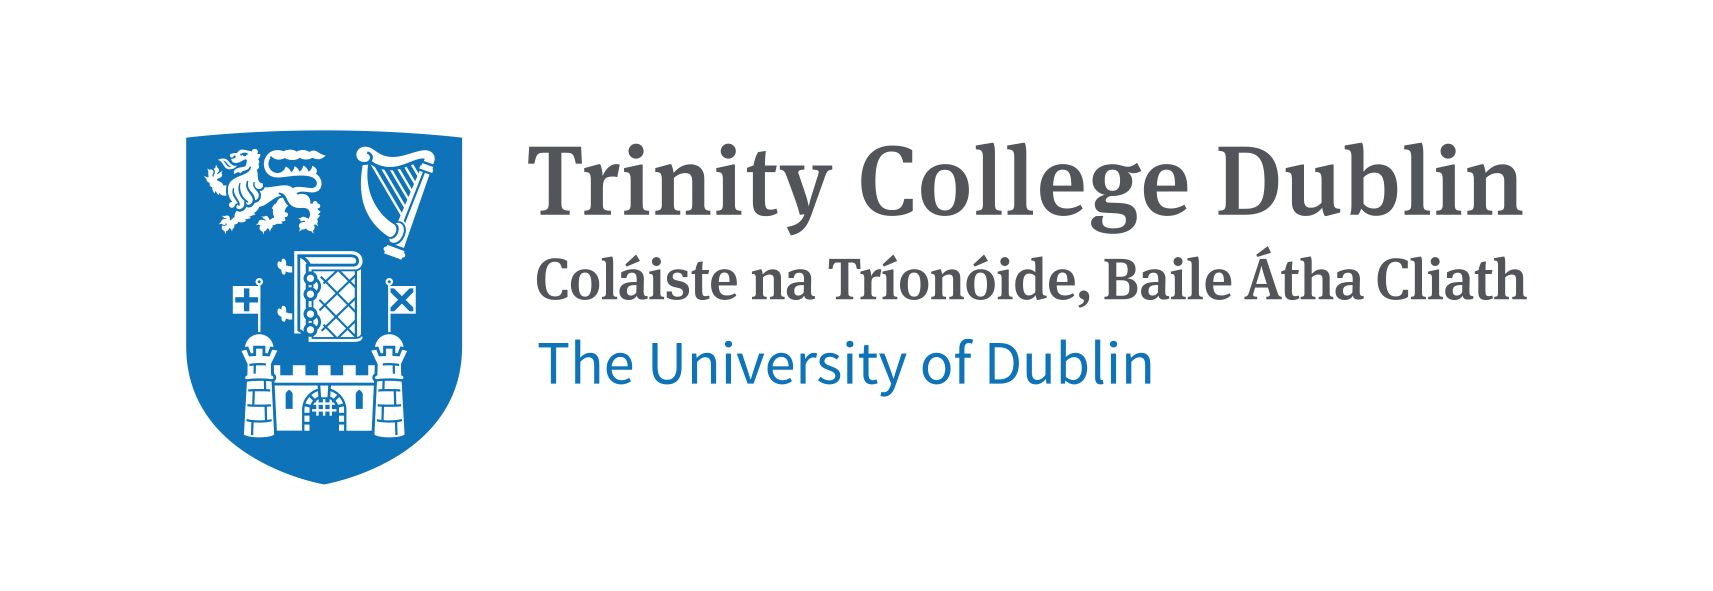 trinity college dublin logo 05